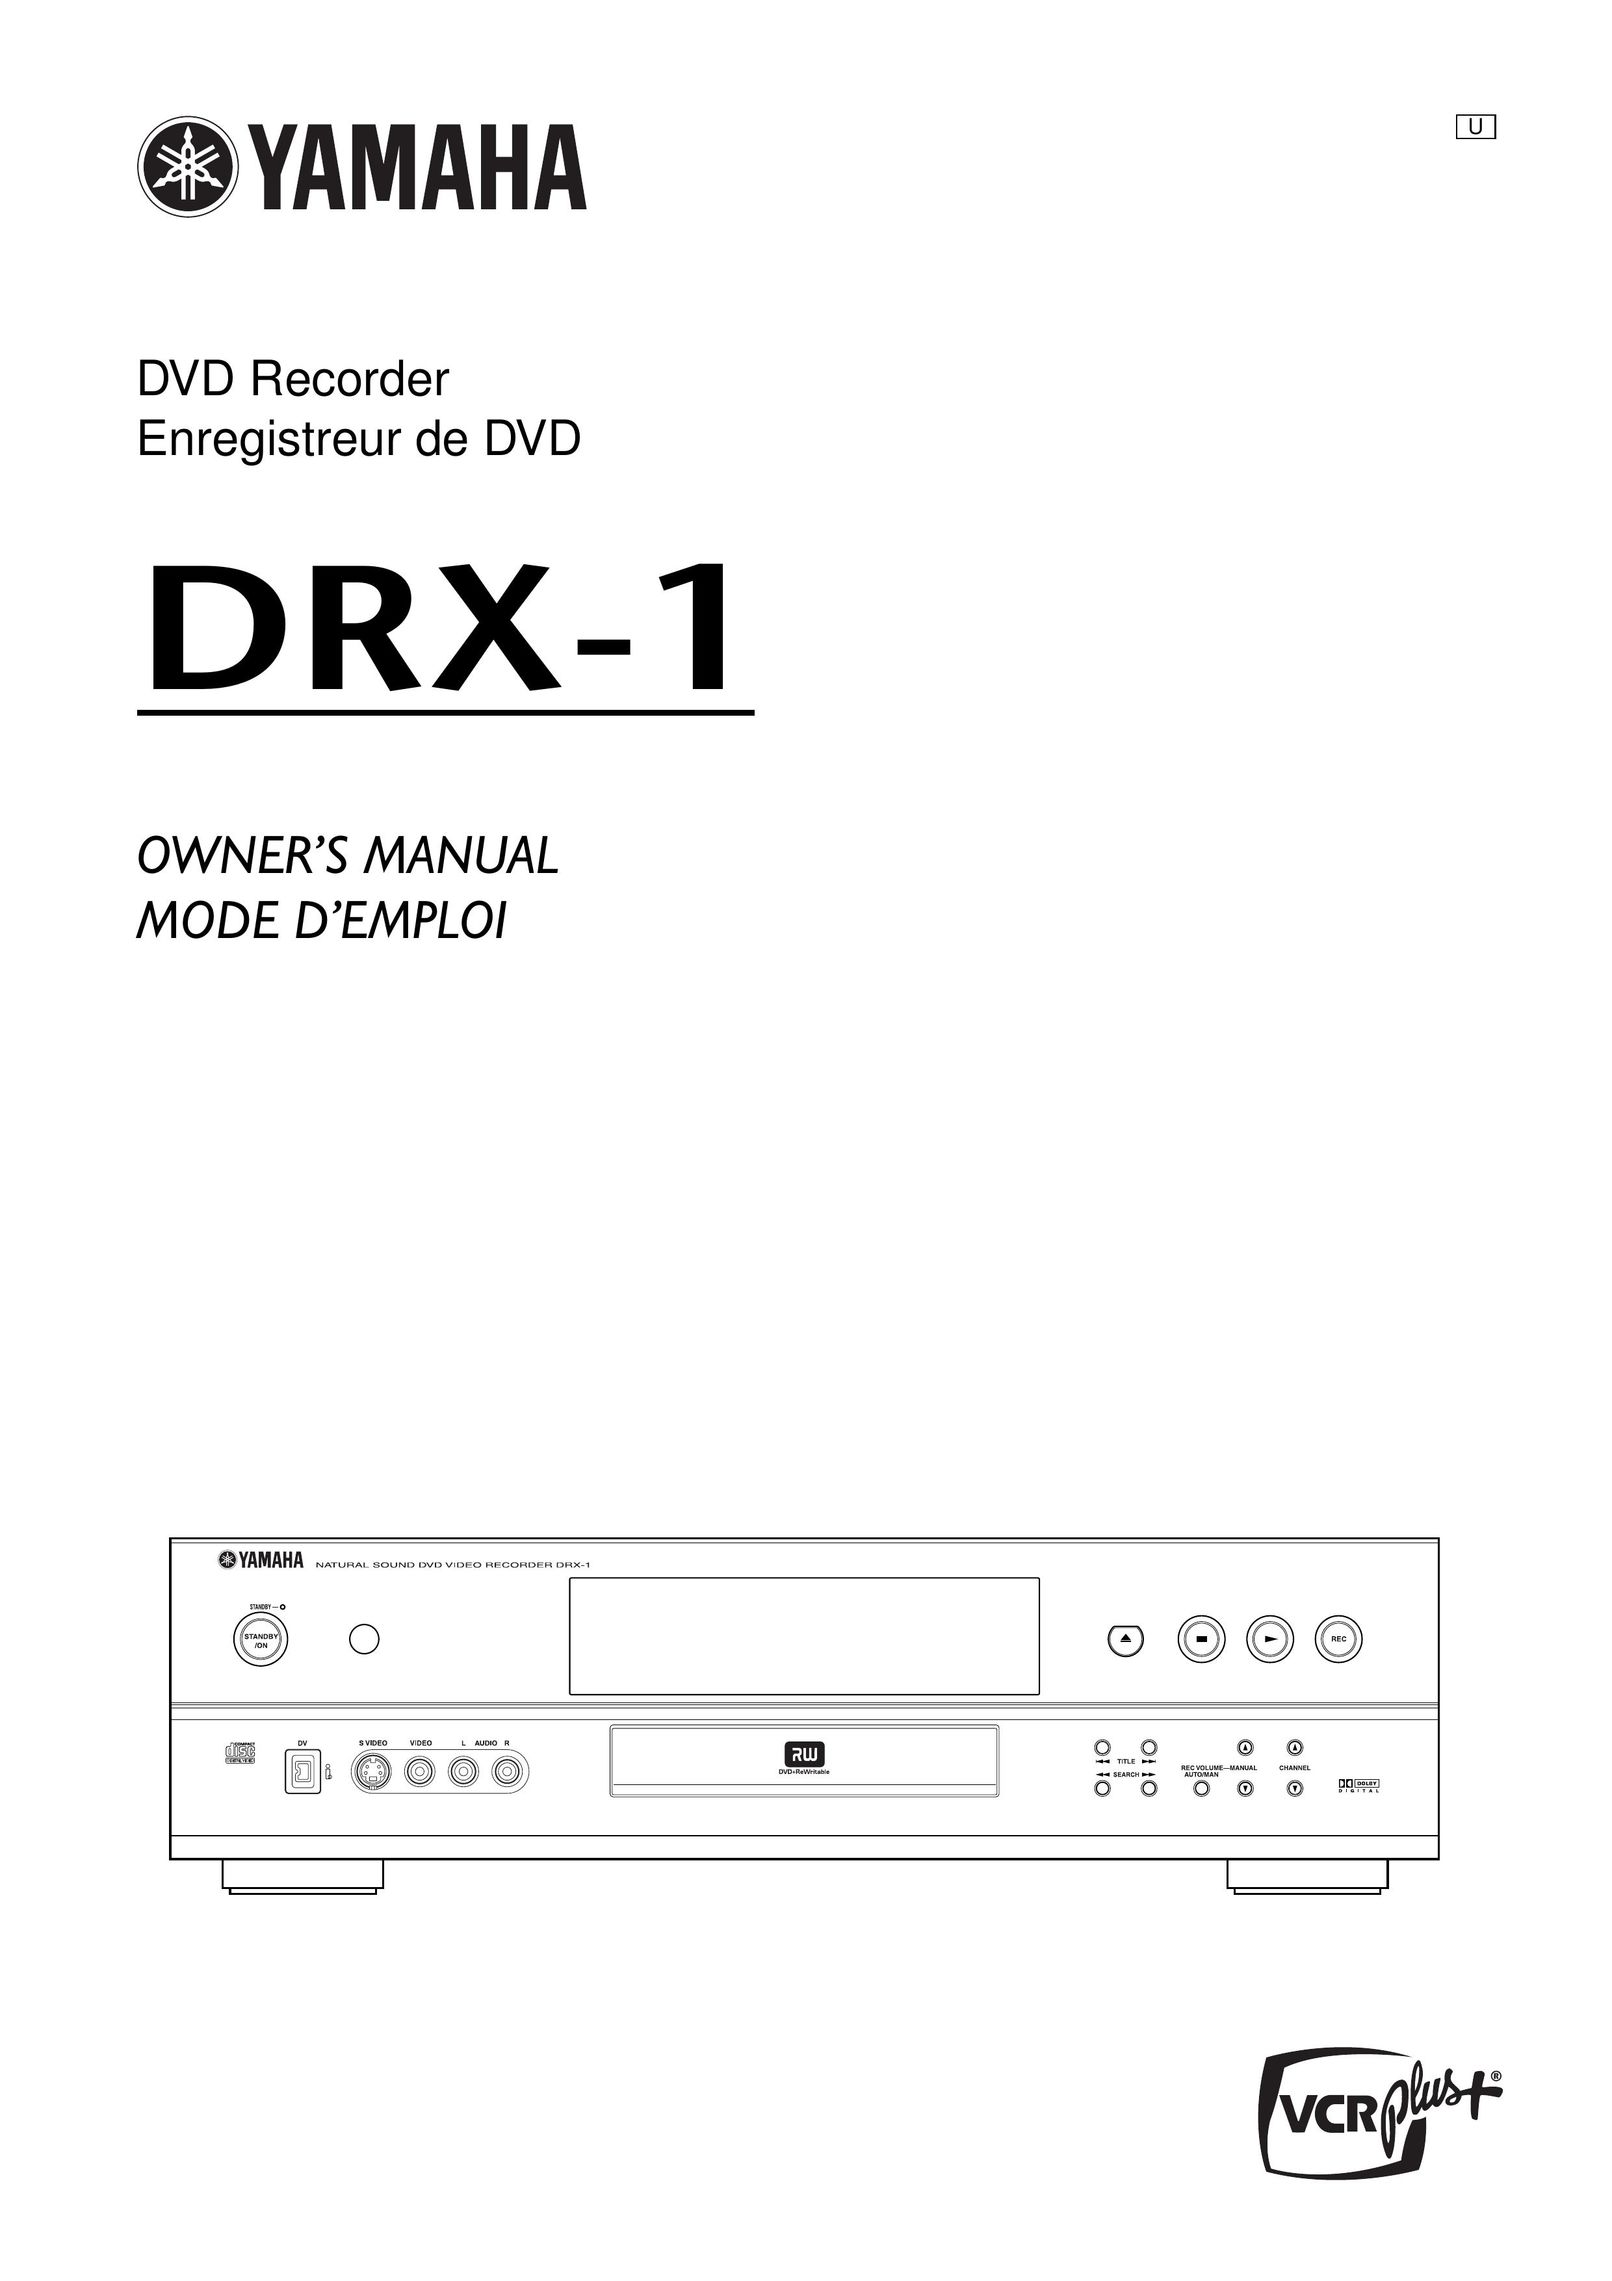 Yamaha DRX-1 DVD Recorder User Manual